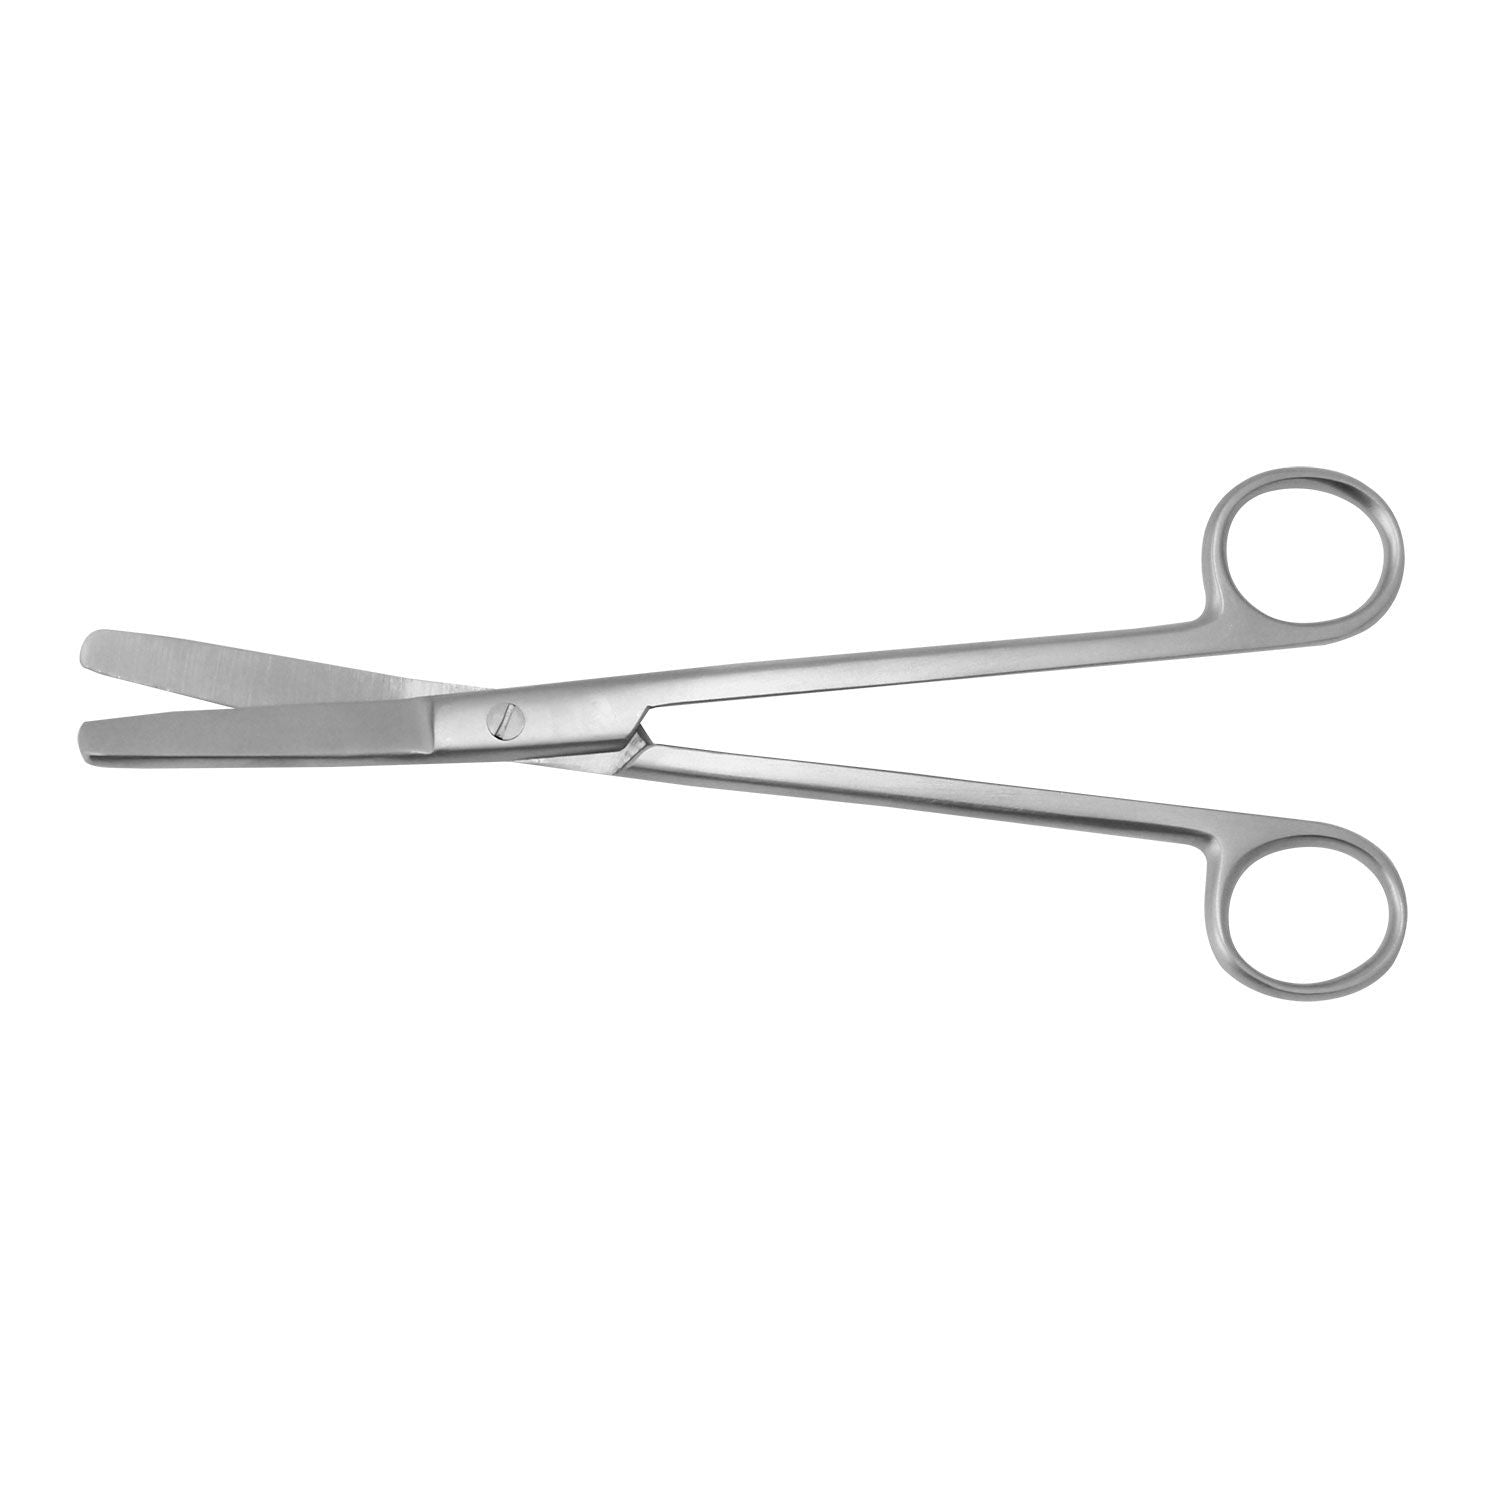 Instramed Currie Uterine Scissors | Curved | 20cm | Single